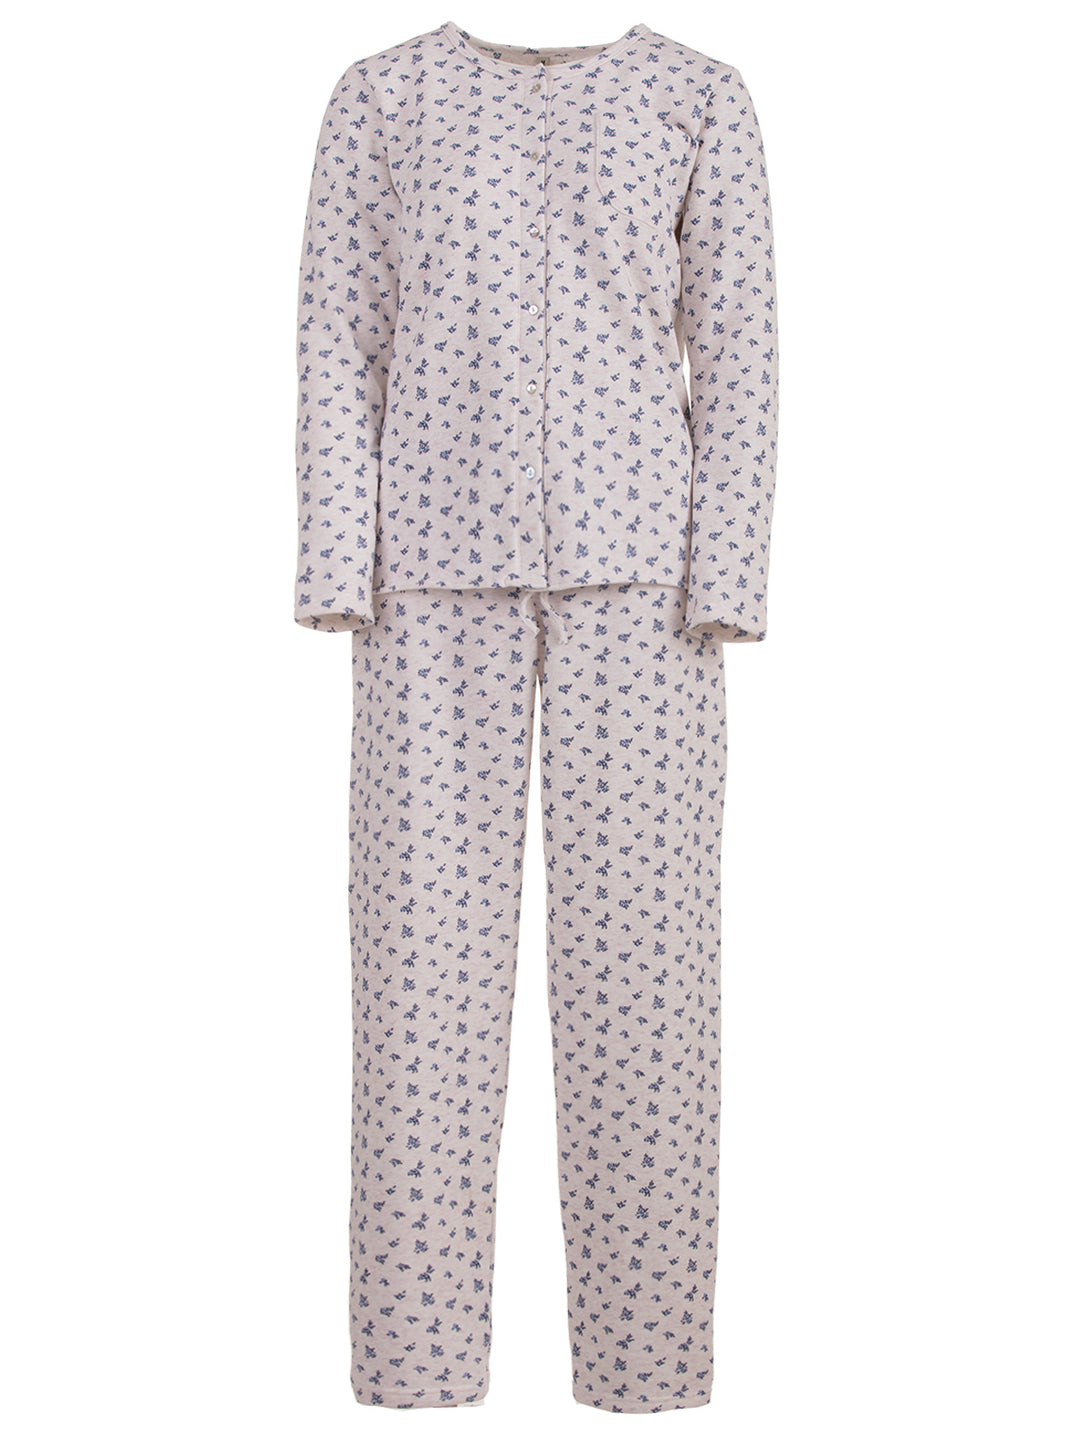 Pyjama Set Thermo - Blumen blau